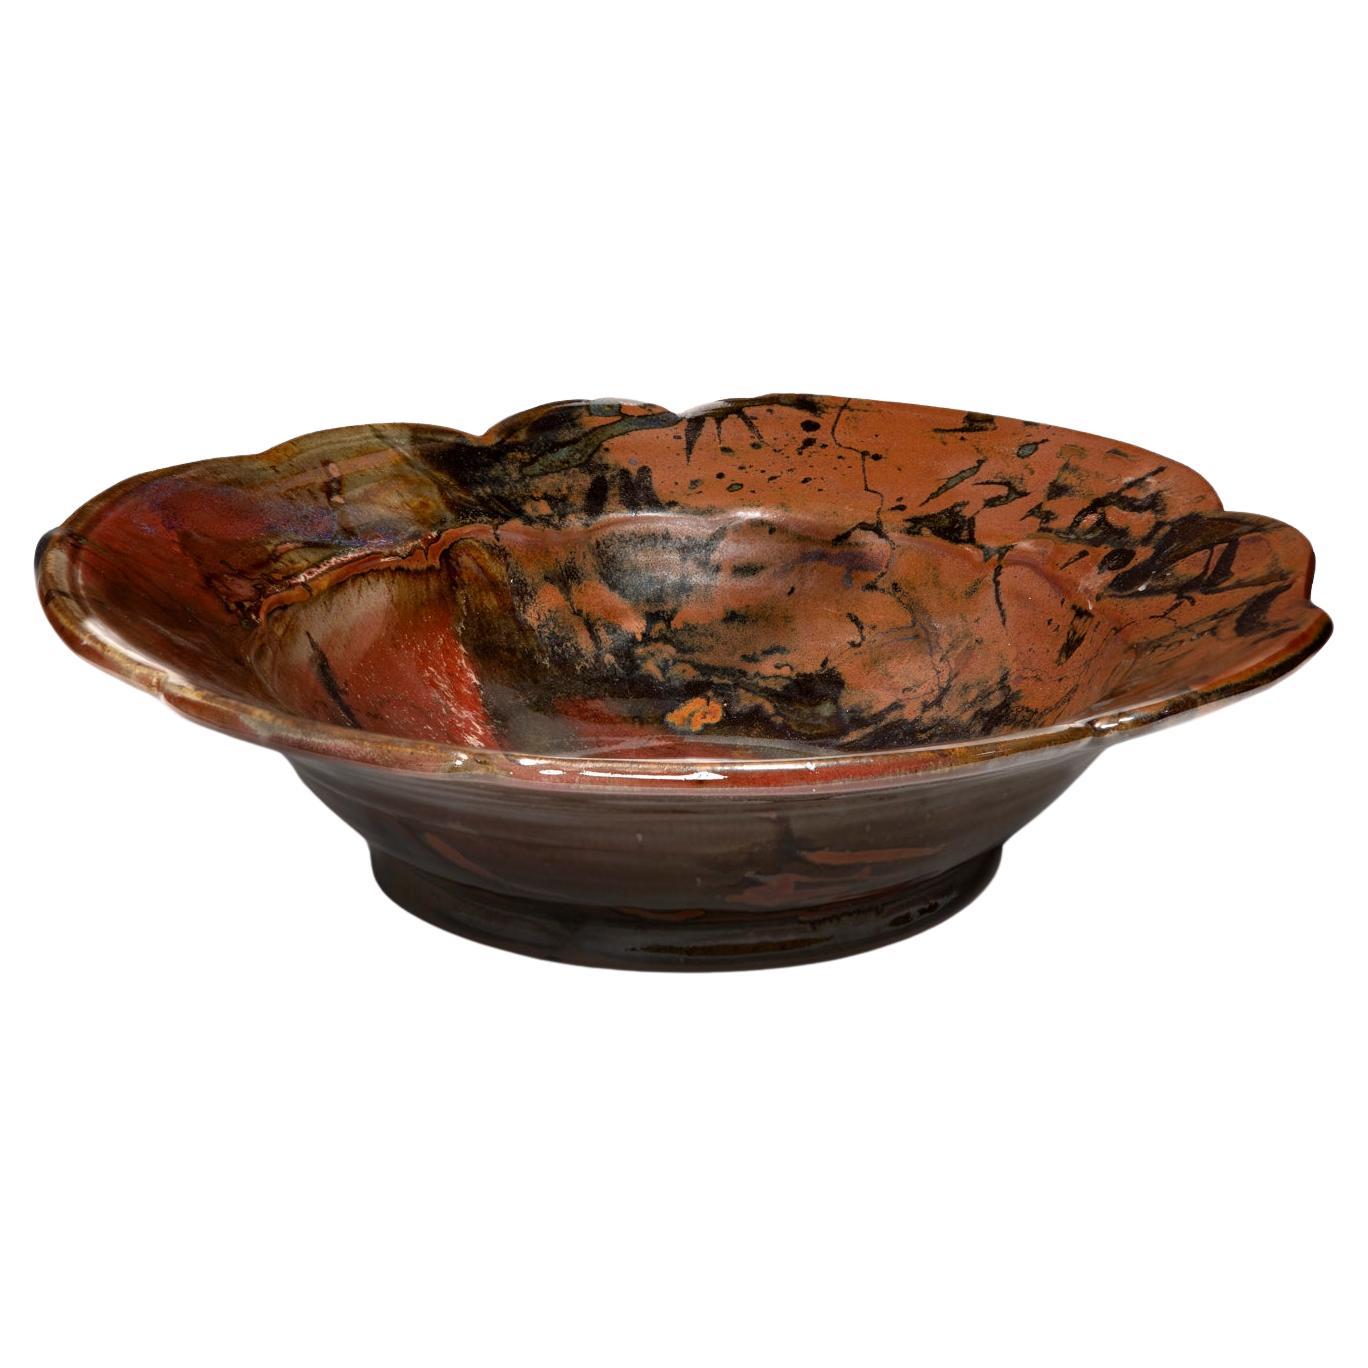 John Glick Plum Street Pottery Ceramic Glazed Bowl/Charger Extra-large 